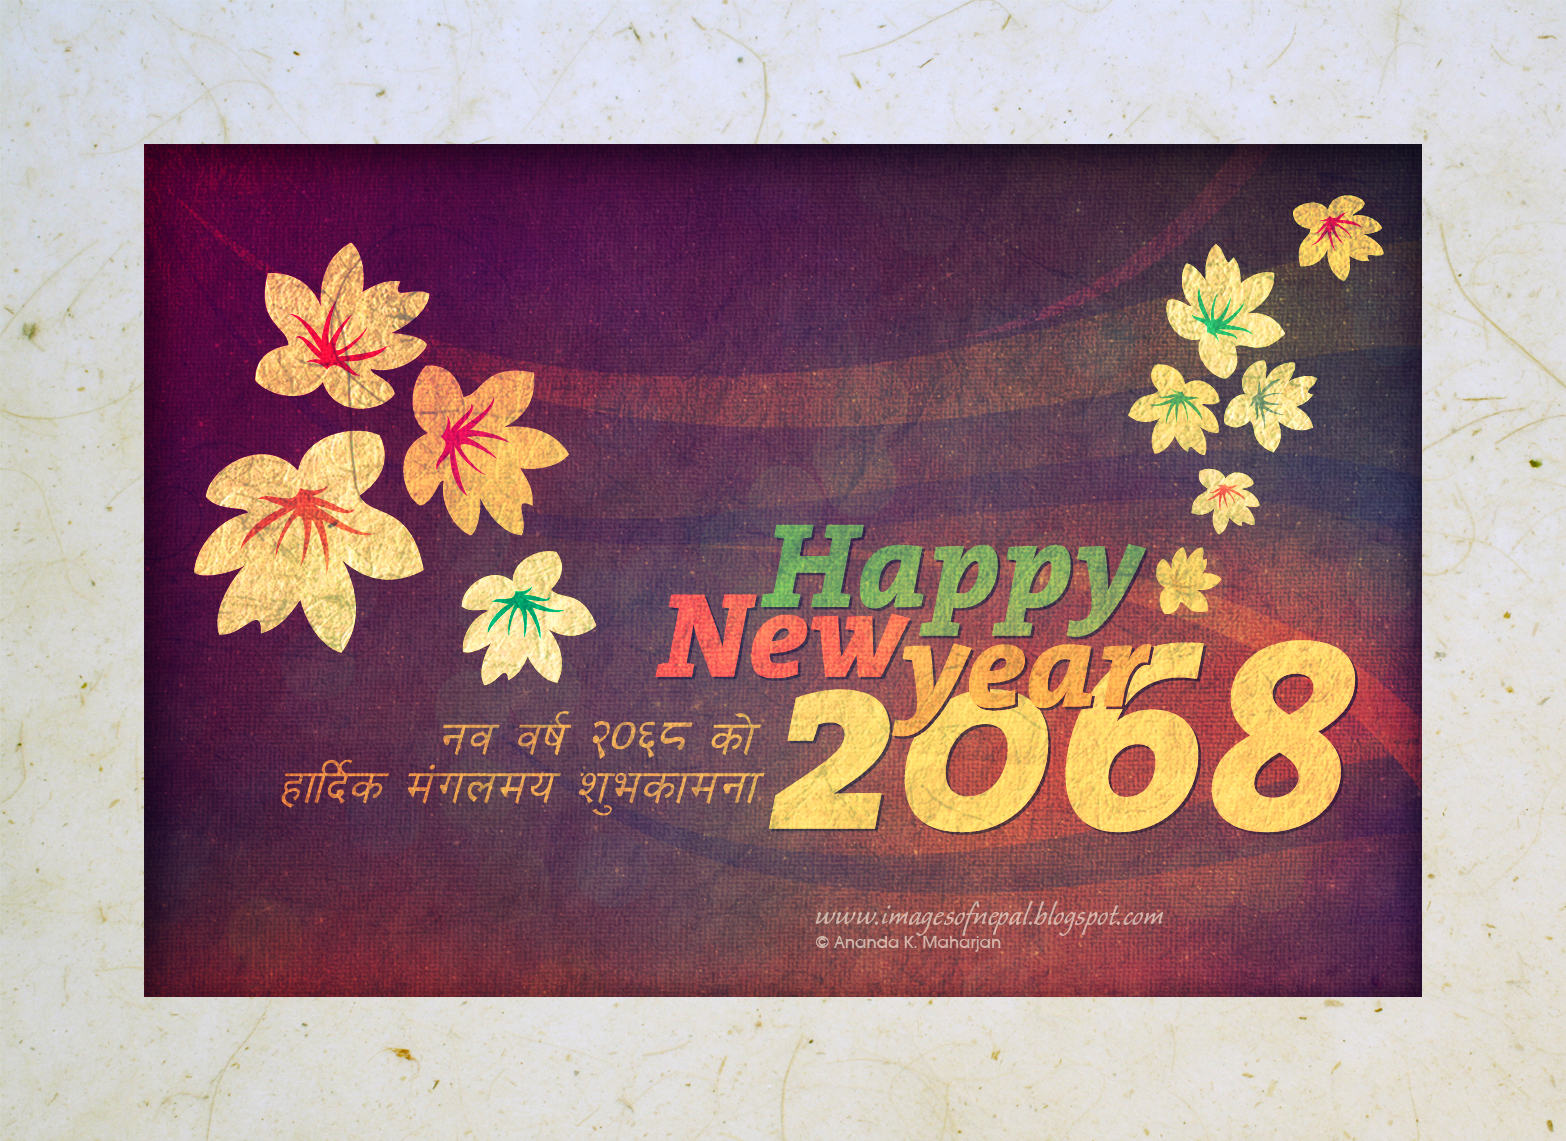 Images of Nepal: Nepali New Year 2068 greetings wallpaper